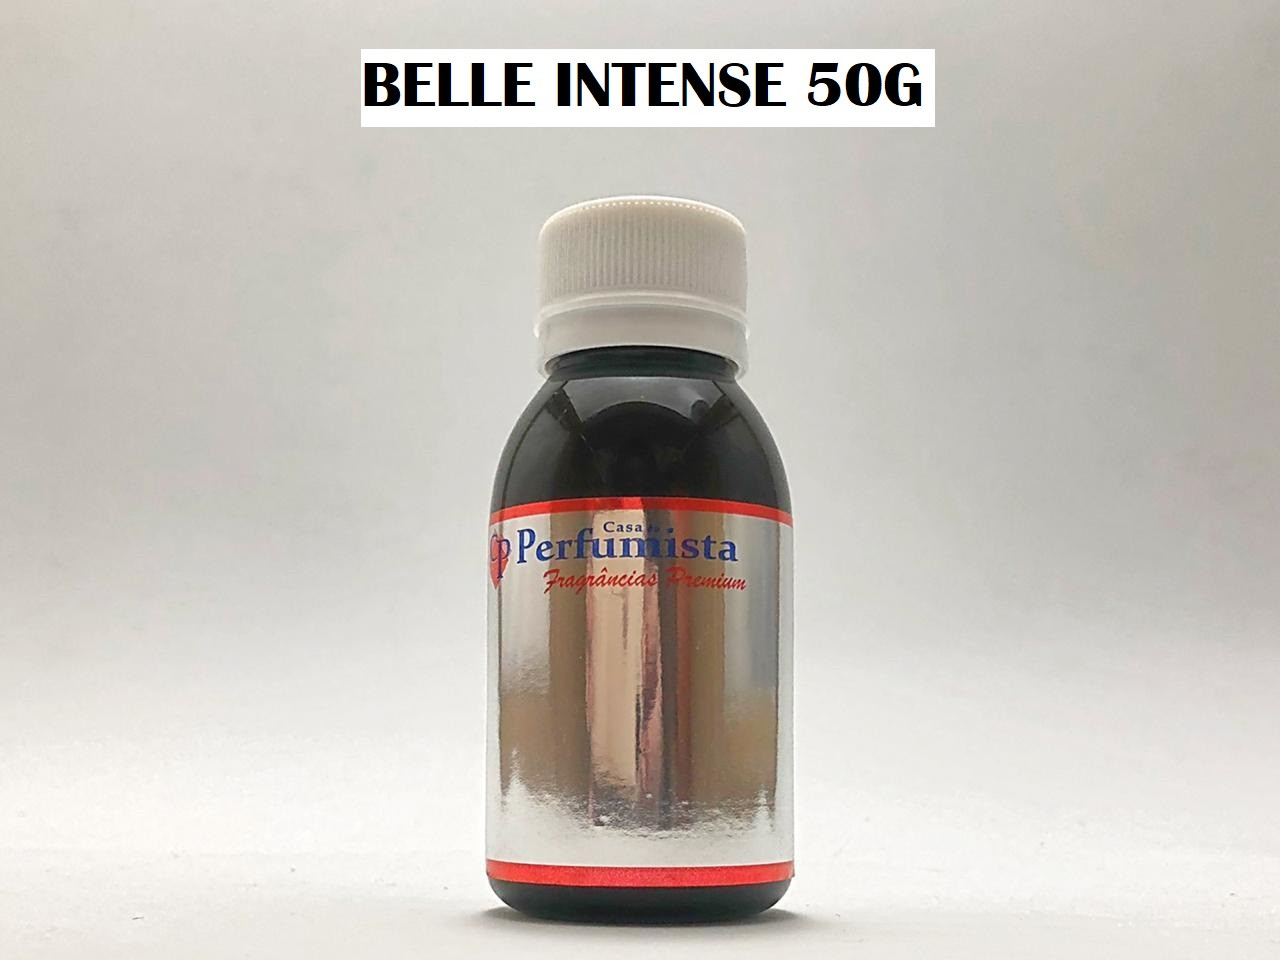 BELLE INTENSE 50g- Inspiração: La Vie Est Belle Intense Feminino 